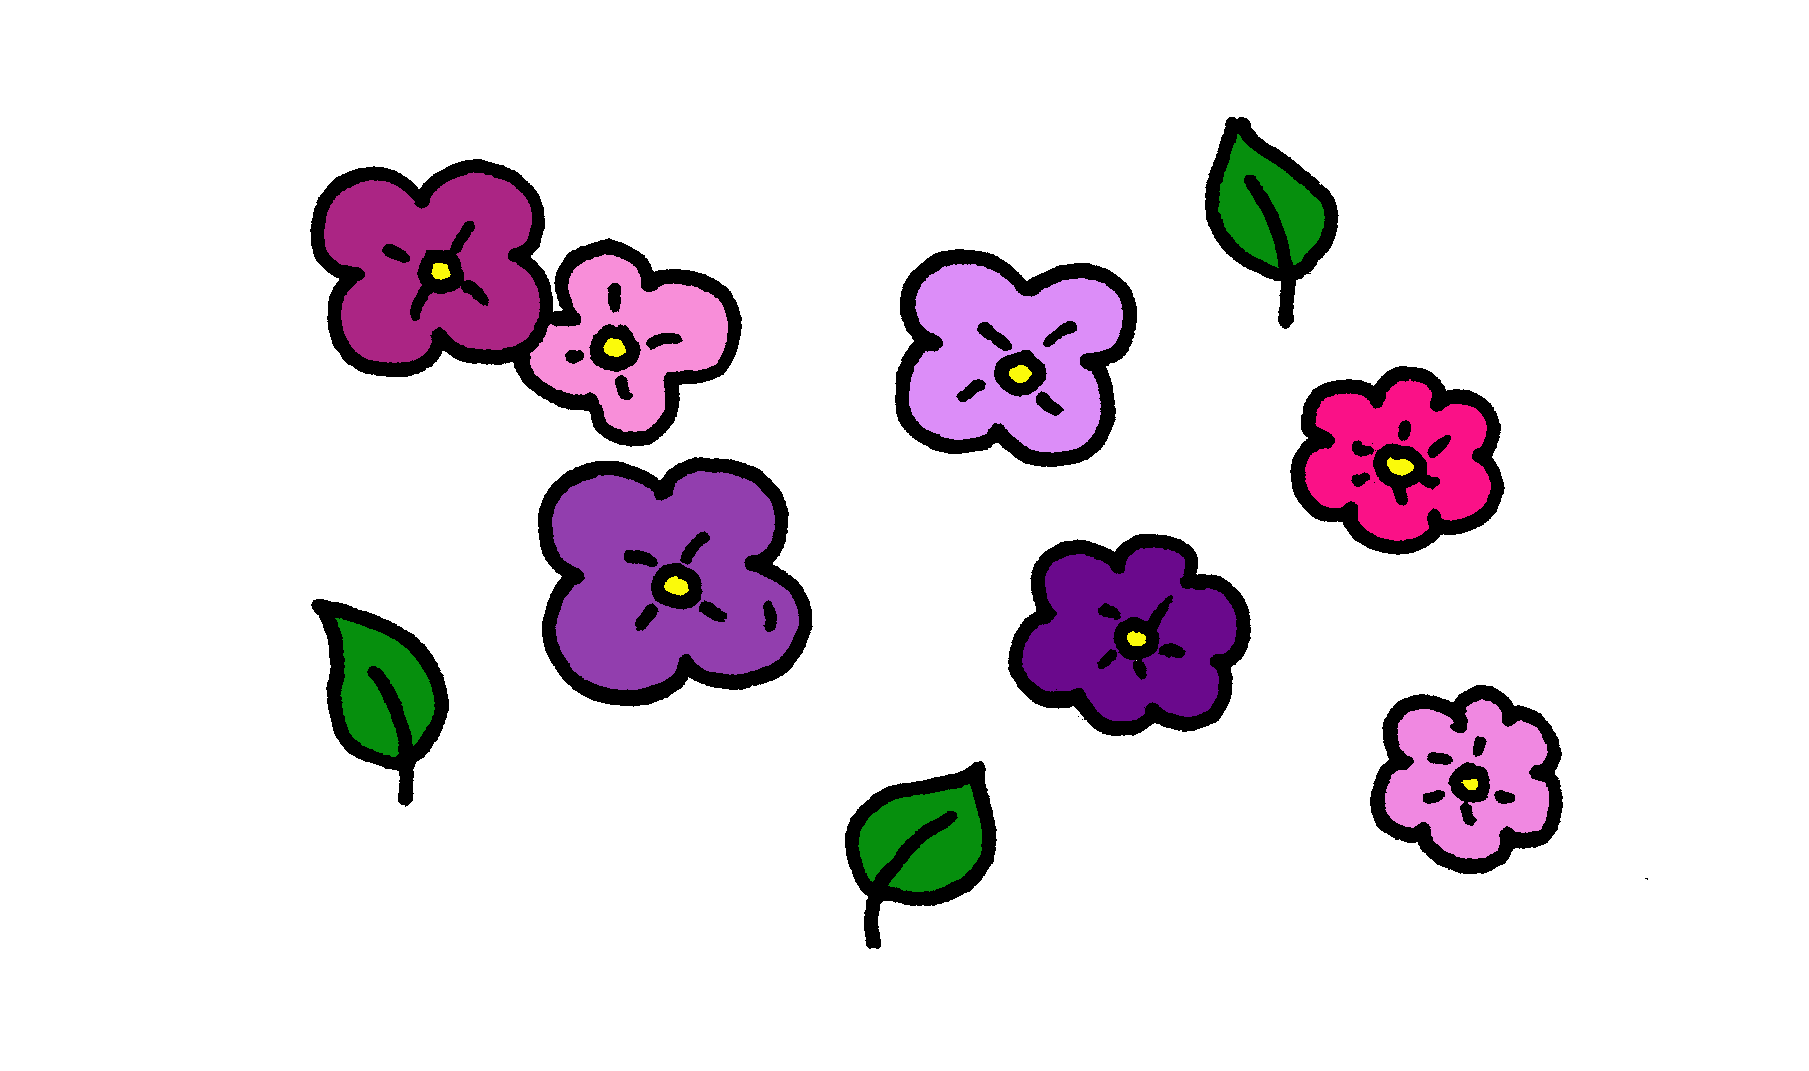 decorative flowers